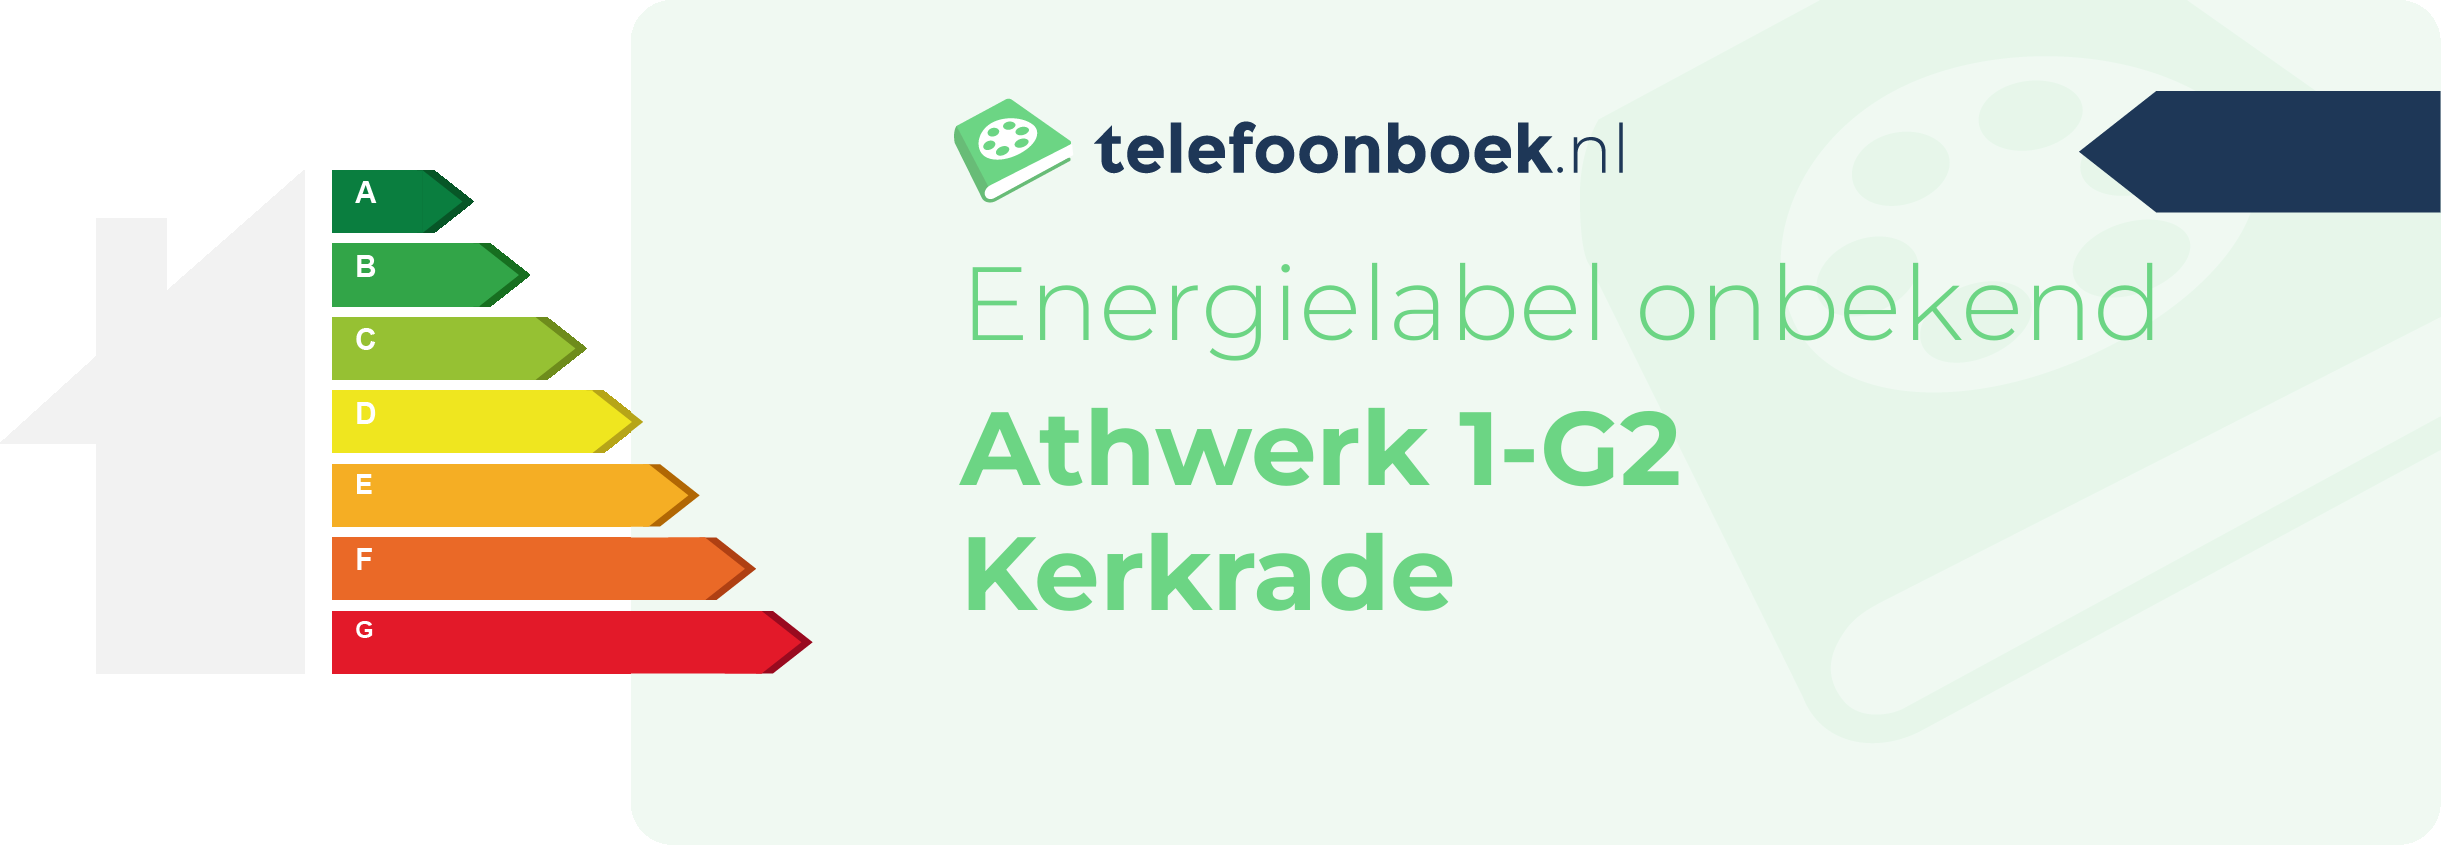 Energielabel Athwerk 1-G2 Kerkrade